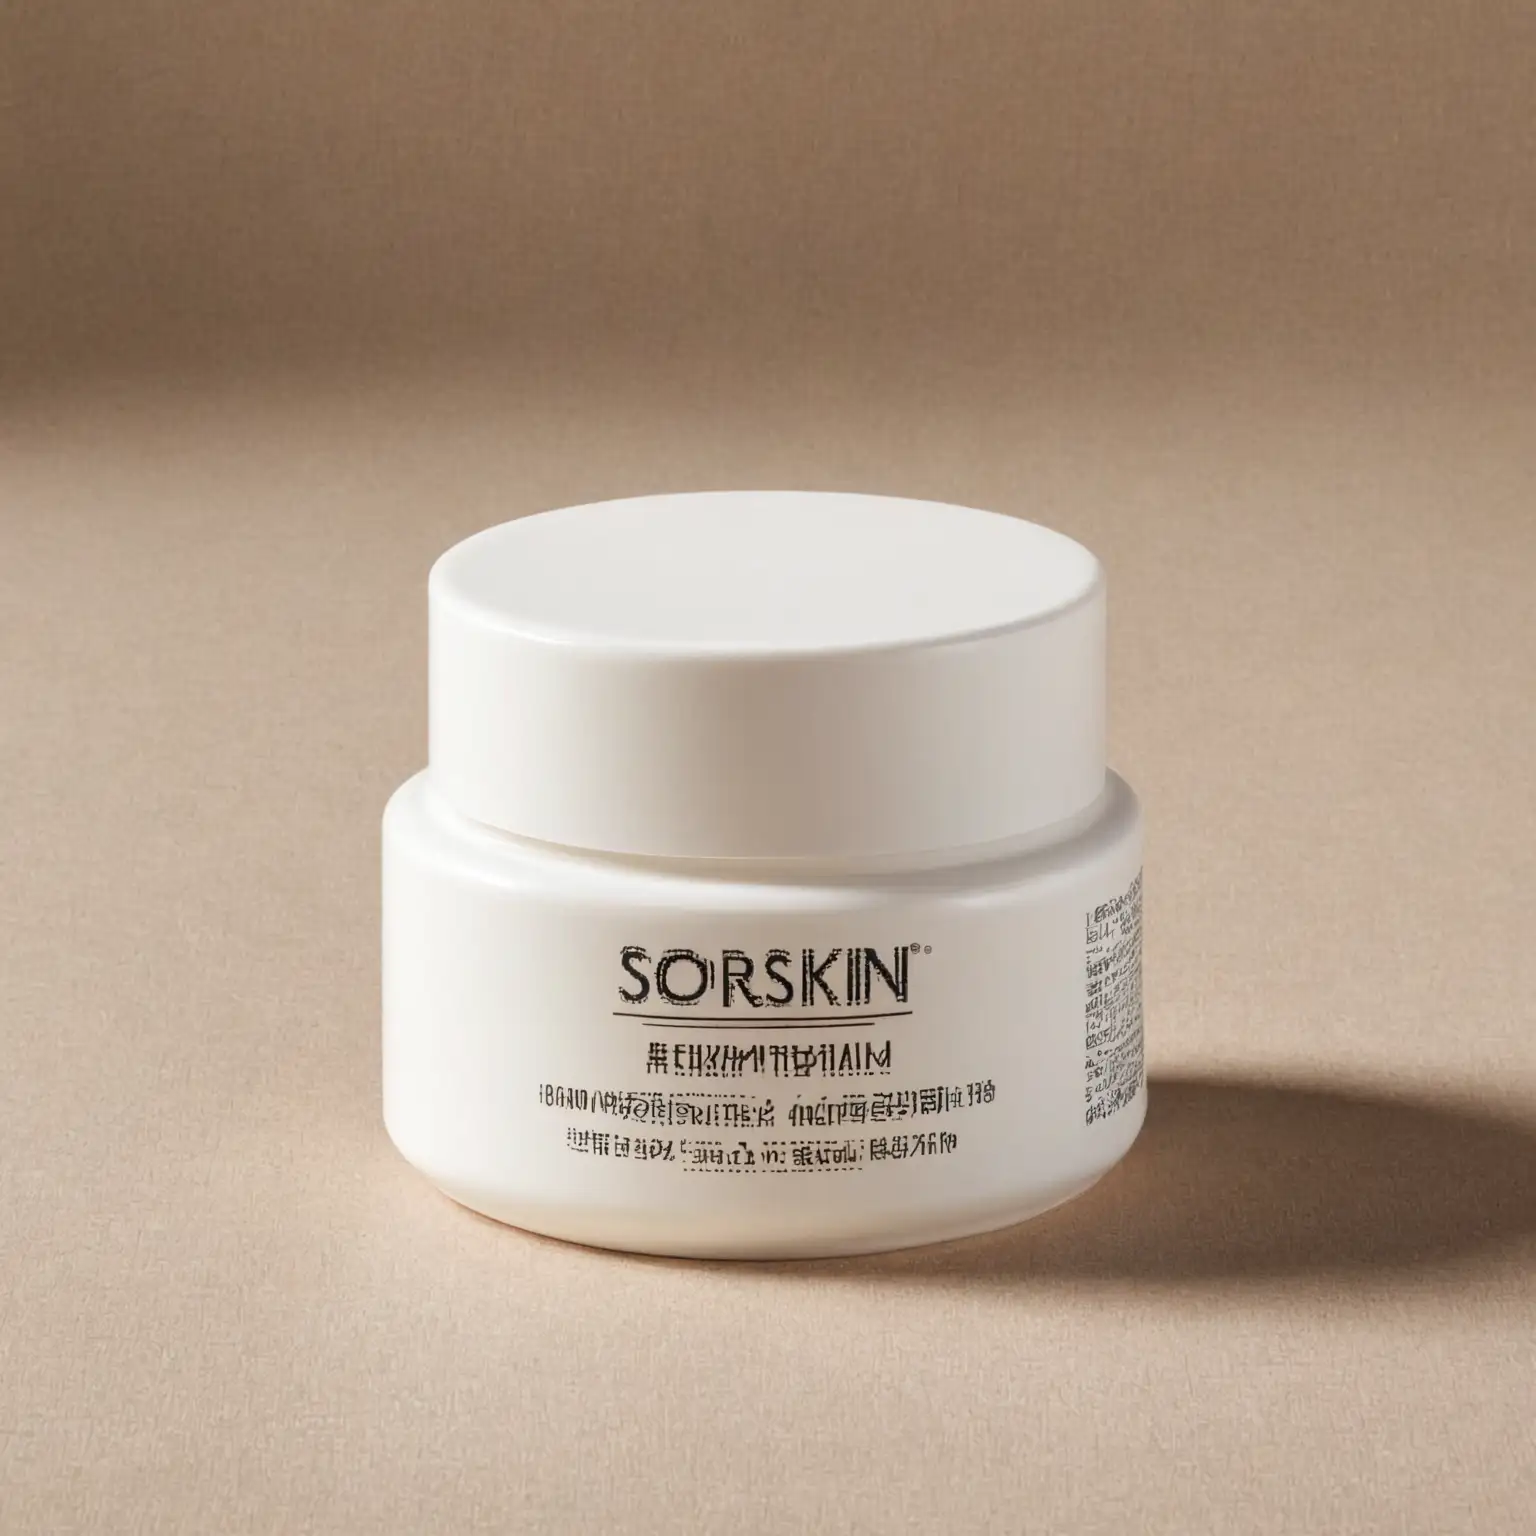 Acne cream mention brand name sforskin